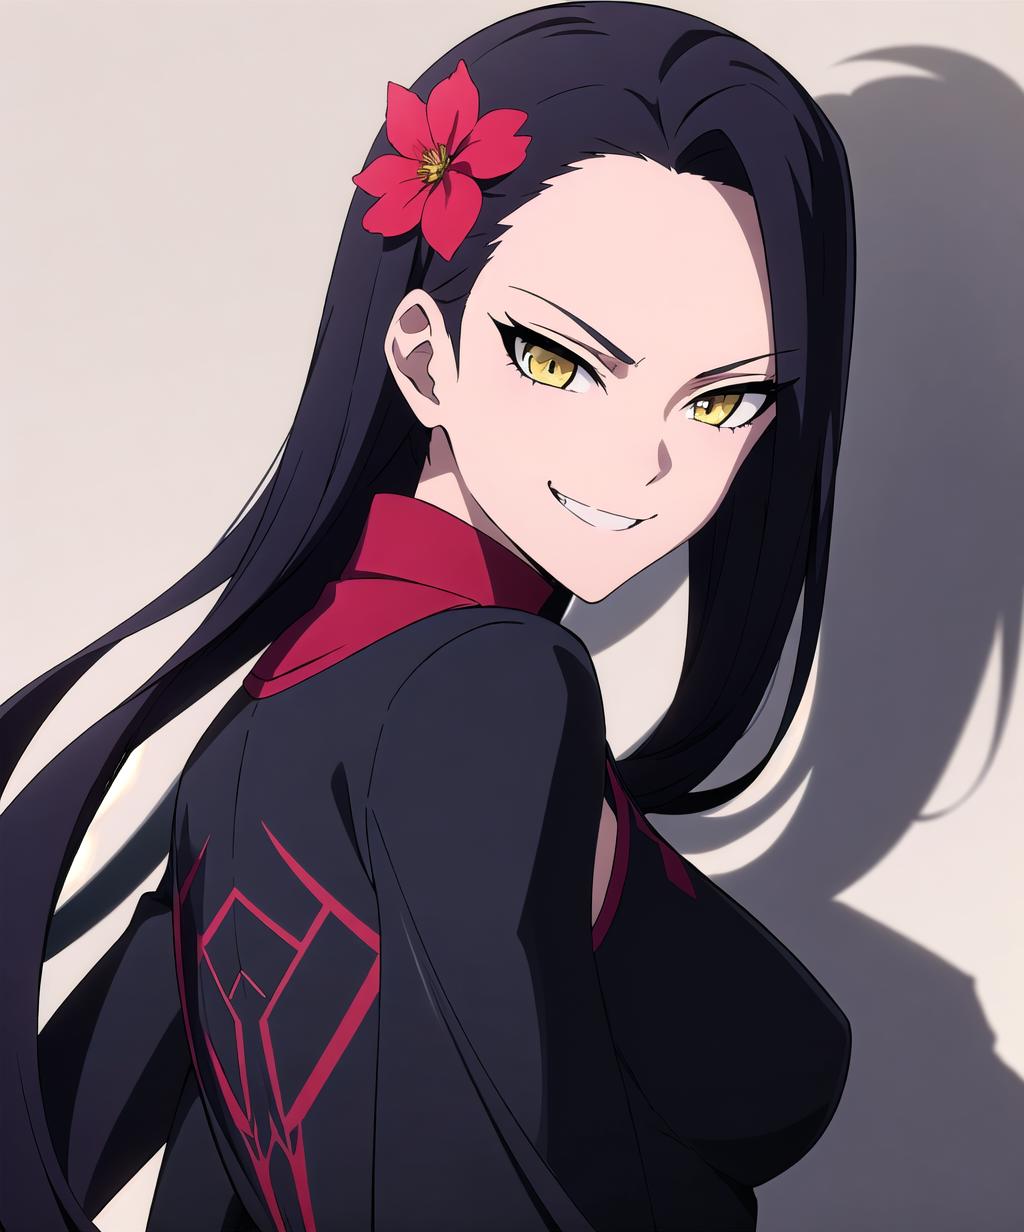 anime girl evil smirk - Google Search | Evil anime, Anime, Anime art-demhanvico.com.vn